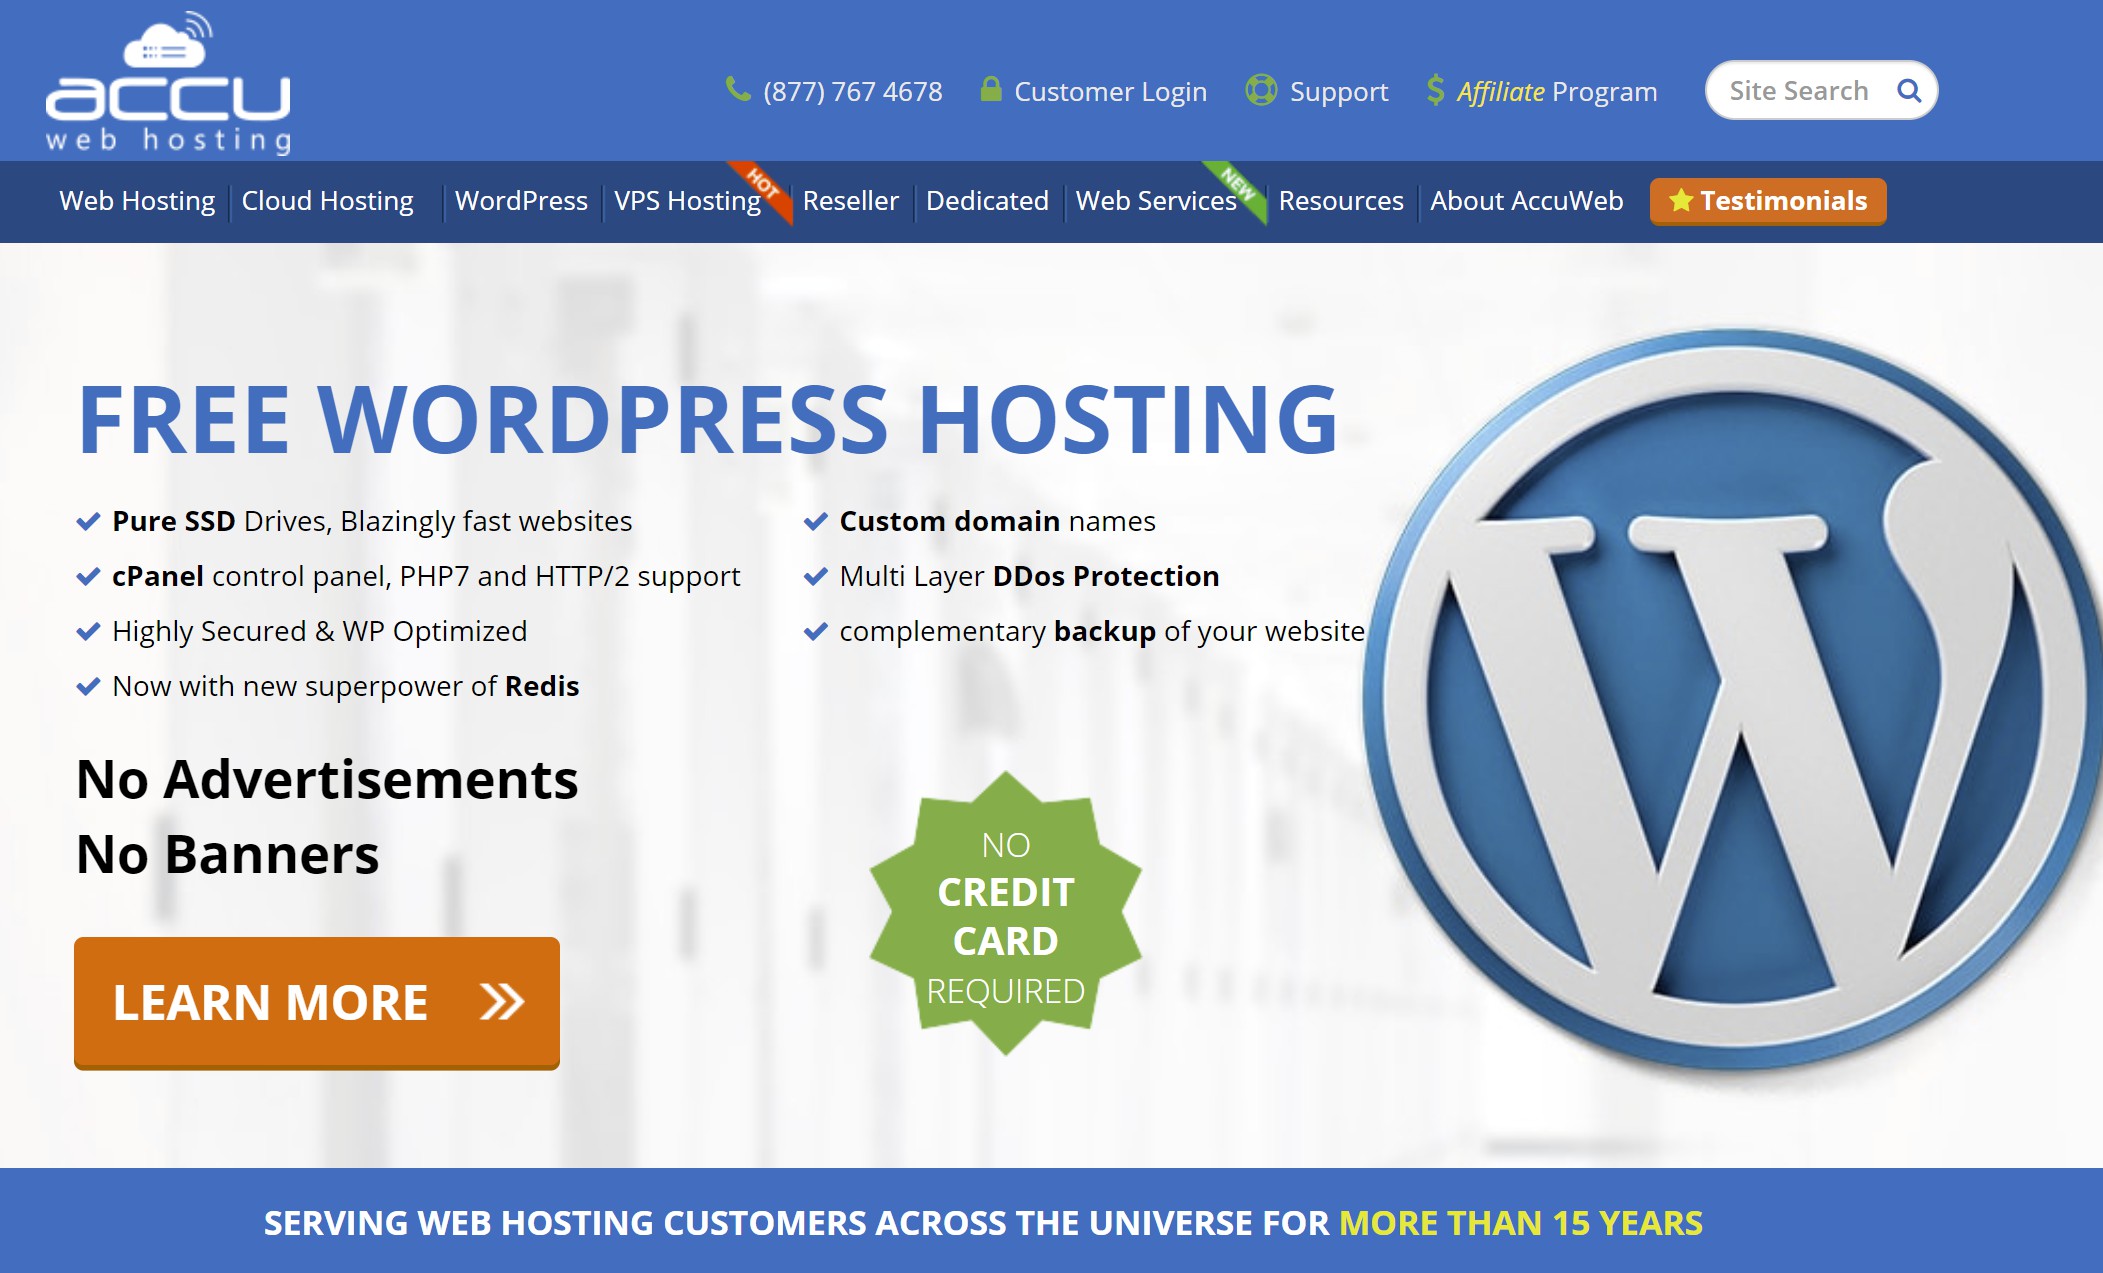 AccuWeb free WordPress hosting